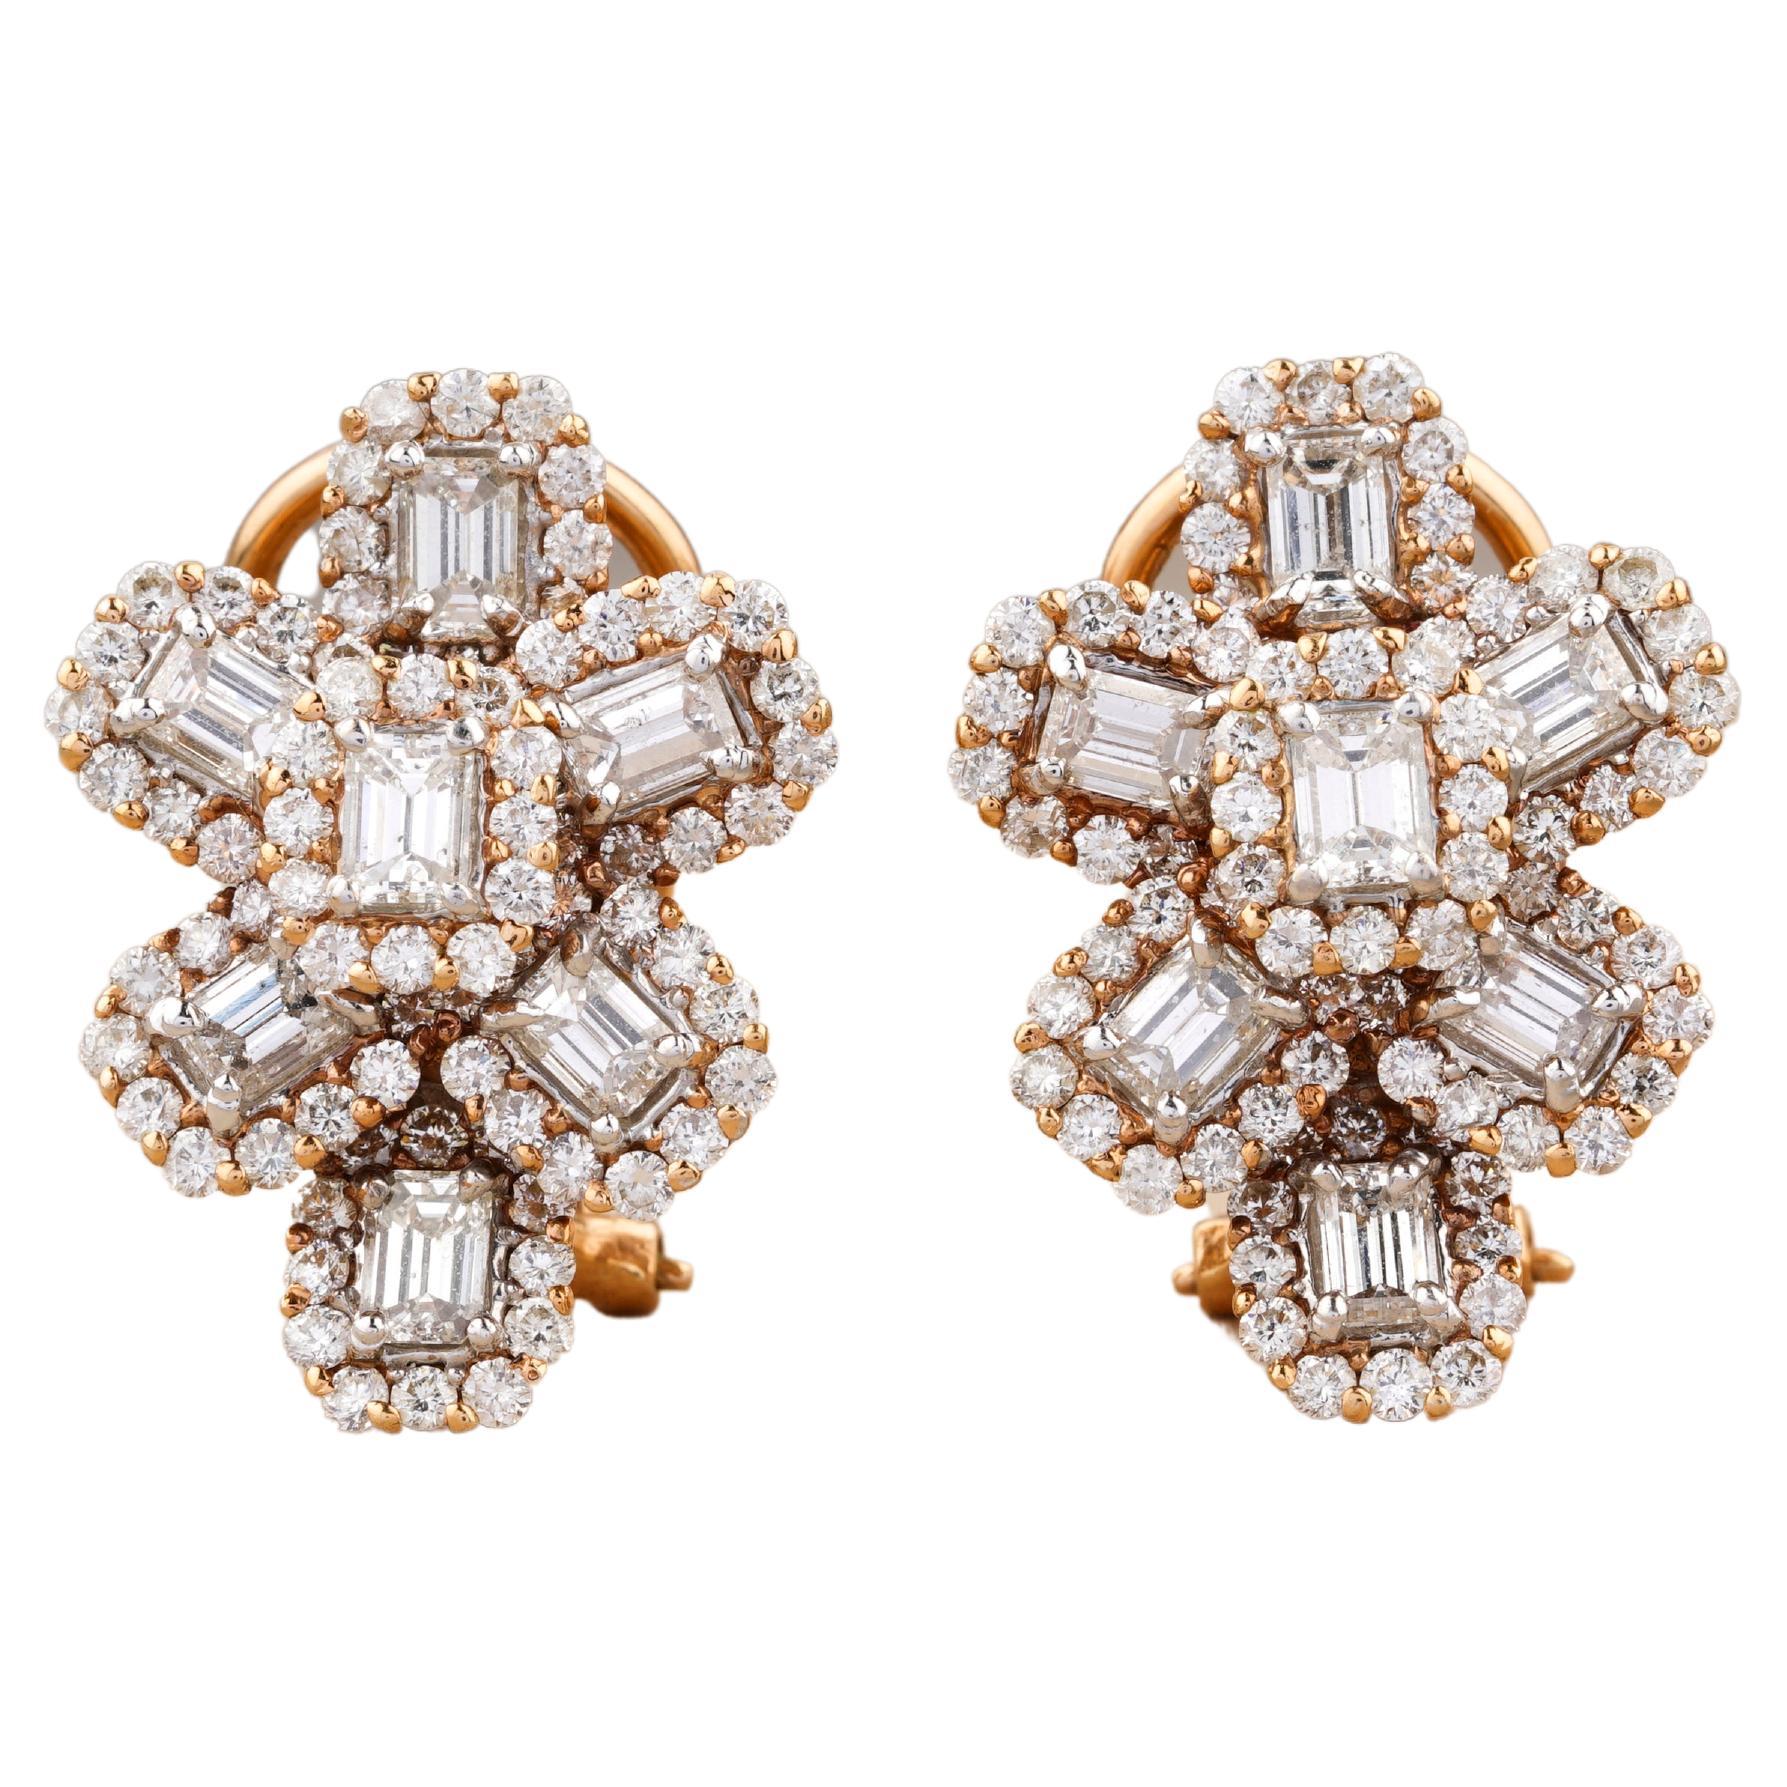 Emeralds & Round Cut Diamond Stud Earrings in 18k Solid Gold